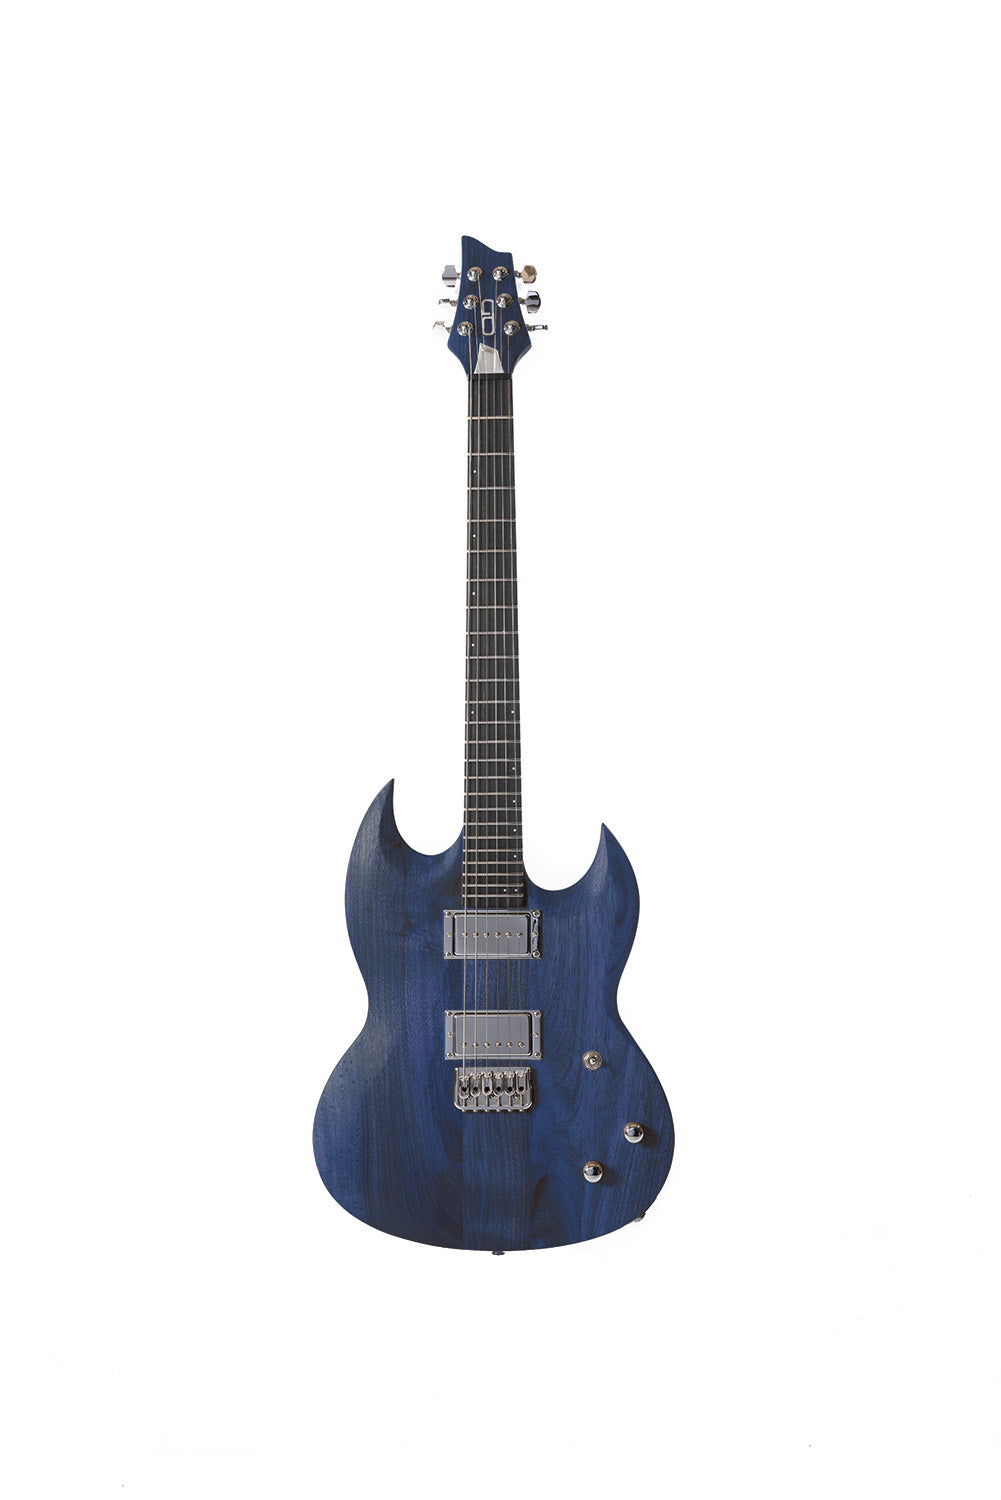 SY_Full_Walnut_Deep_Blue_Front_De_Leeuw_Guitars_Paris_Made_in_France_Luthier_Guitar_Maker_France_Neck_Through_Manche_Traversant